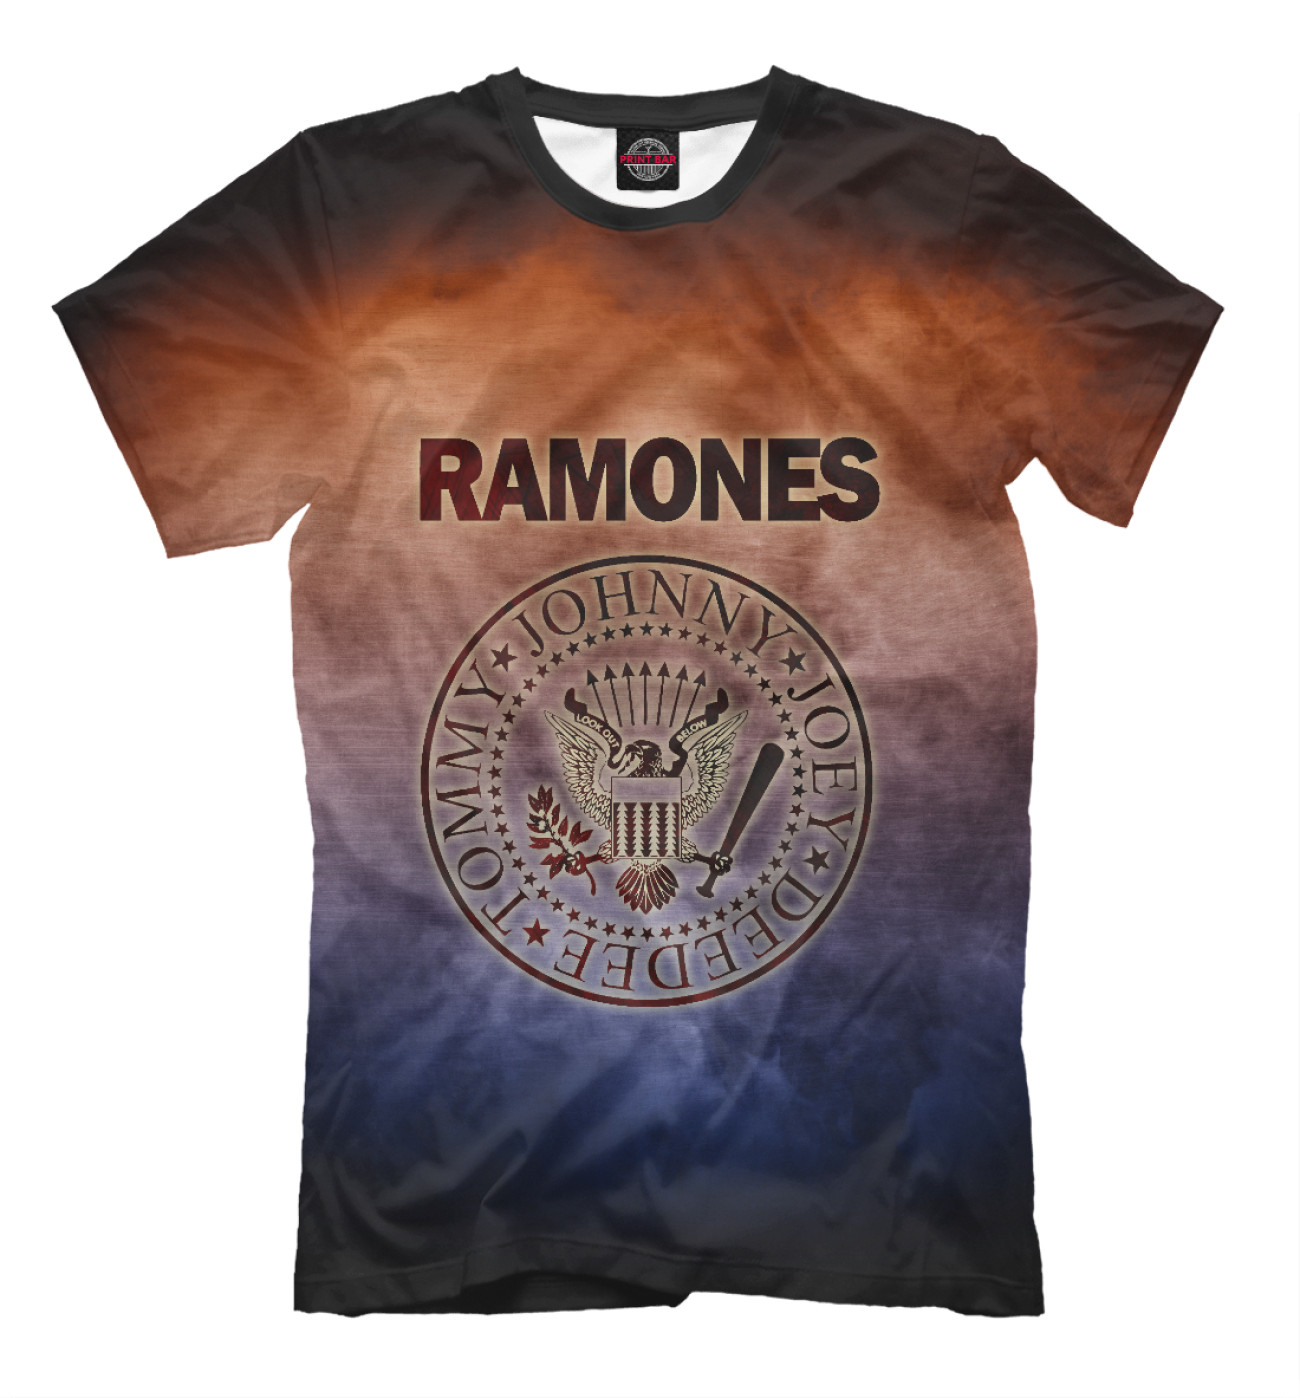 Мужская Футболка Ramones, артикул: RMN-599202-fut-2